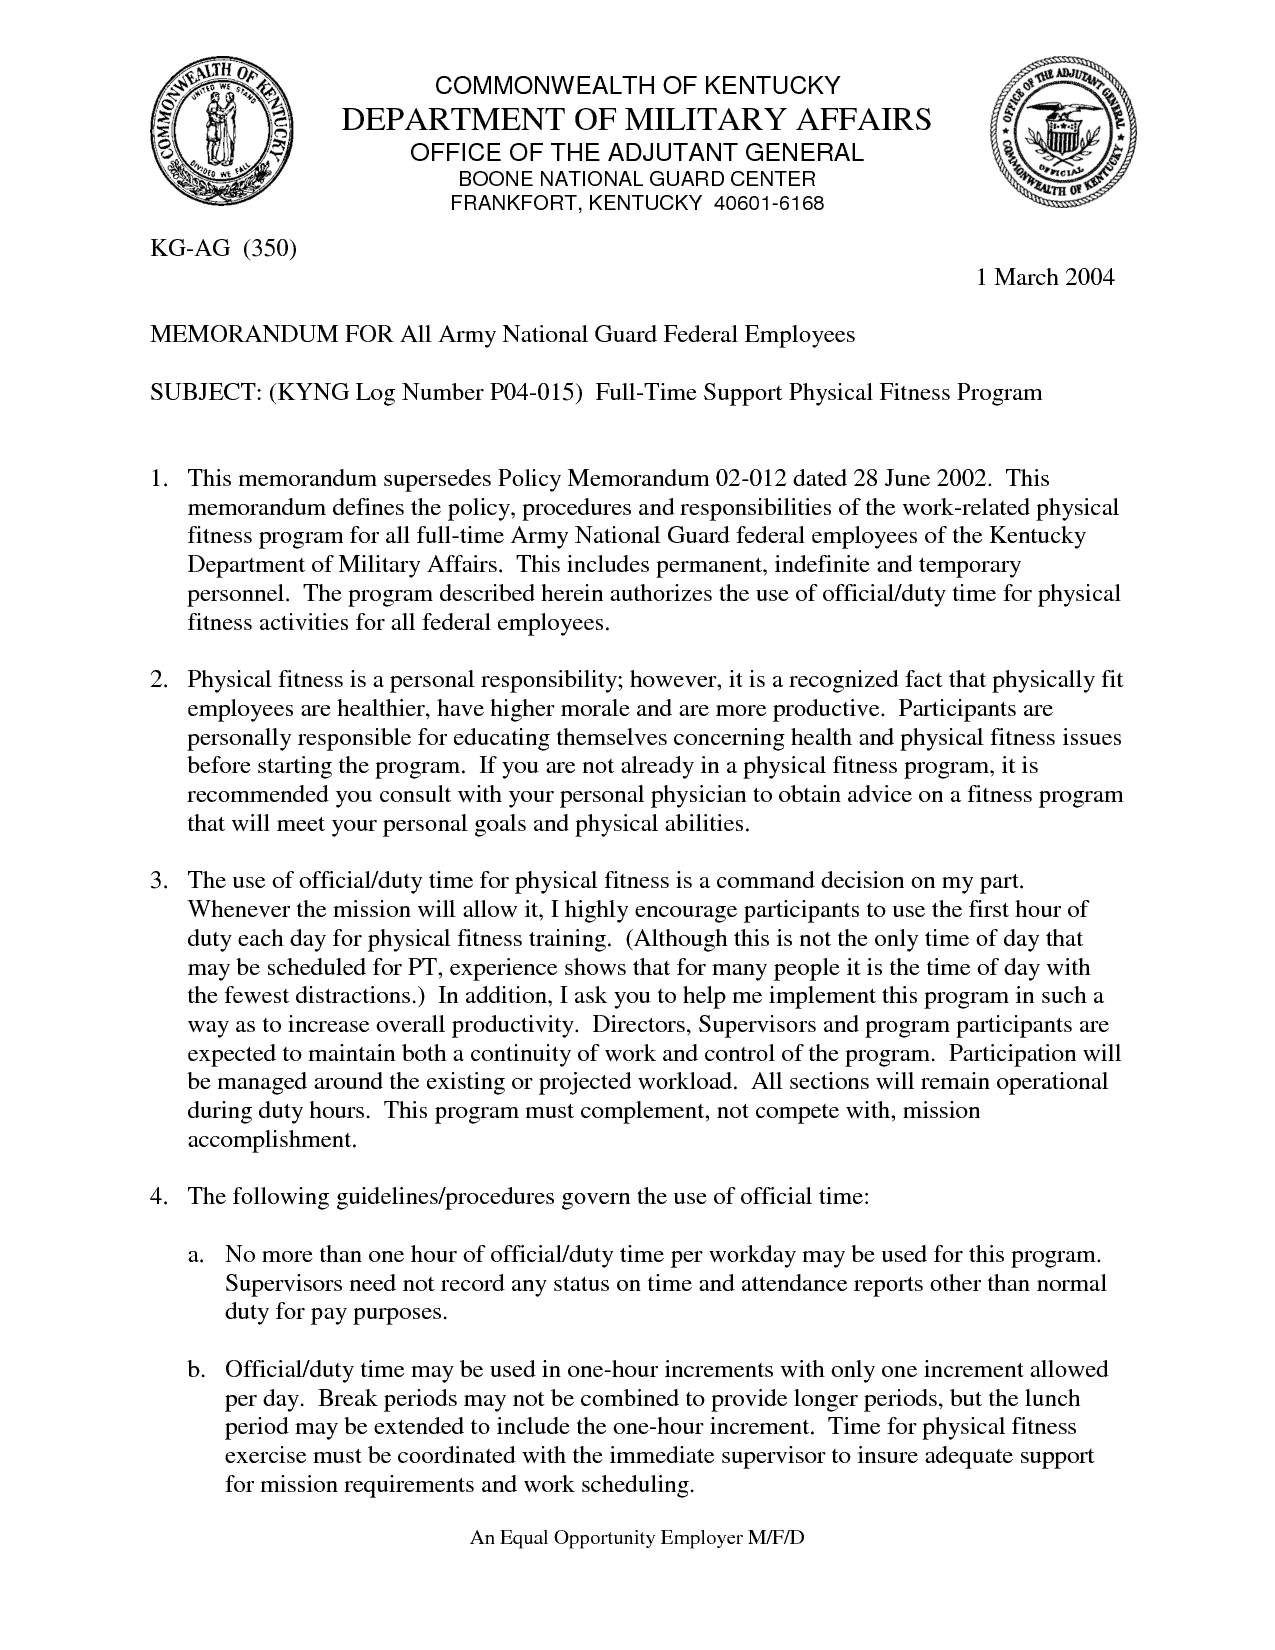 Army Memorandum Template 9.